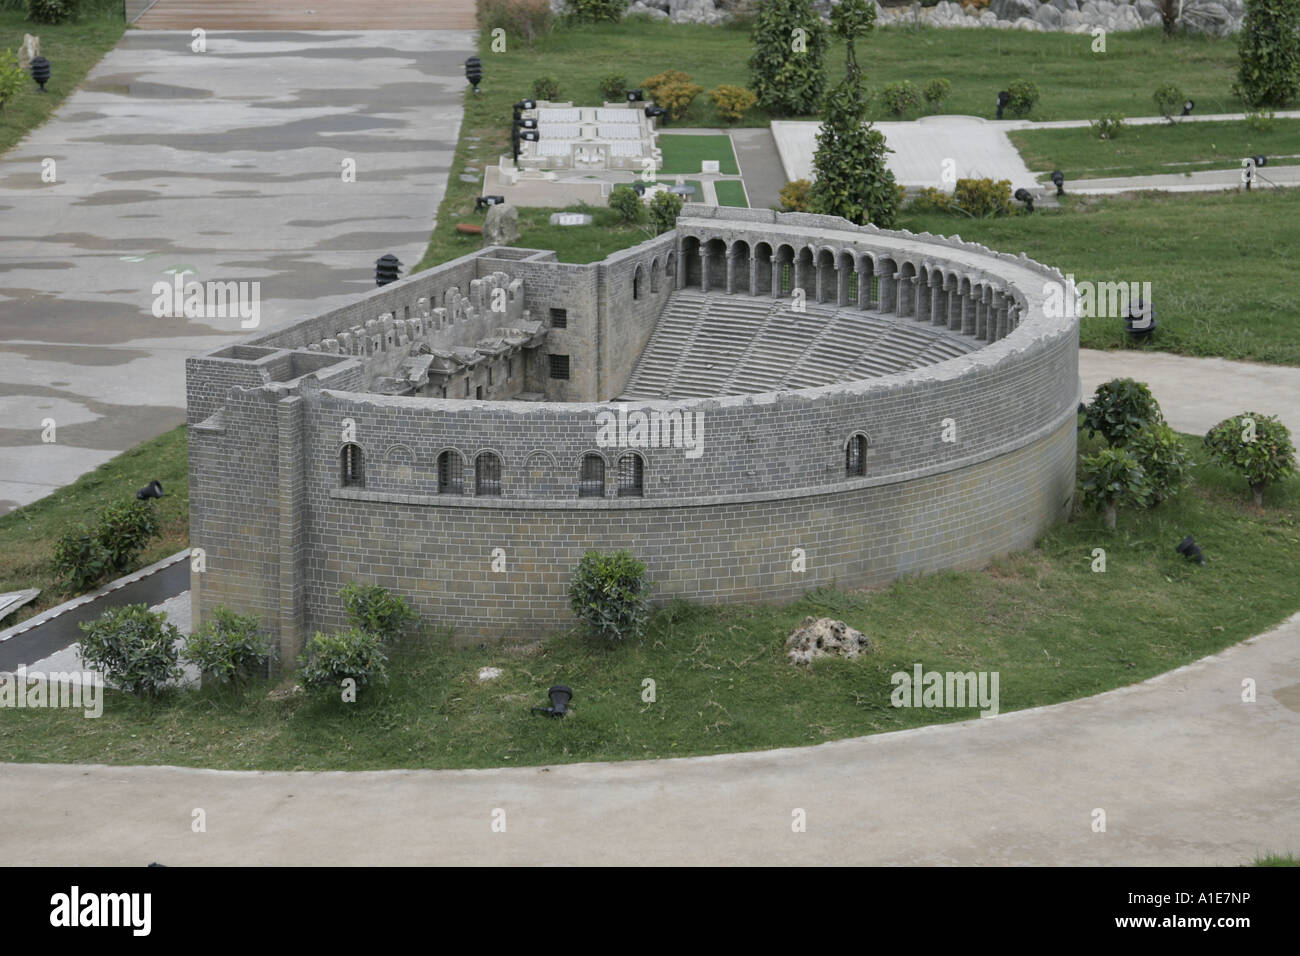 the amphitheater of Aspendos as a miniature model, Turkey Stock Photo